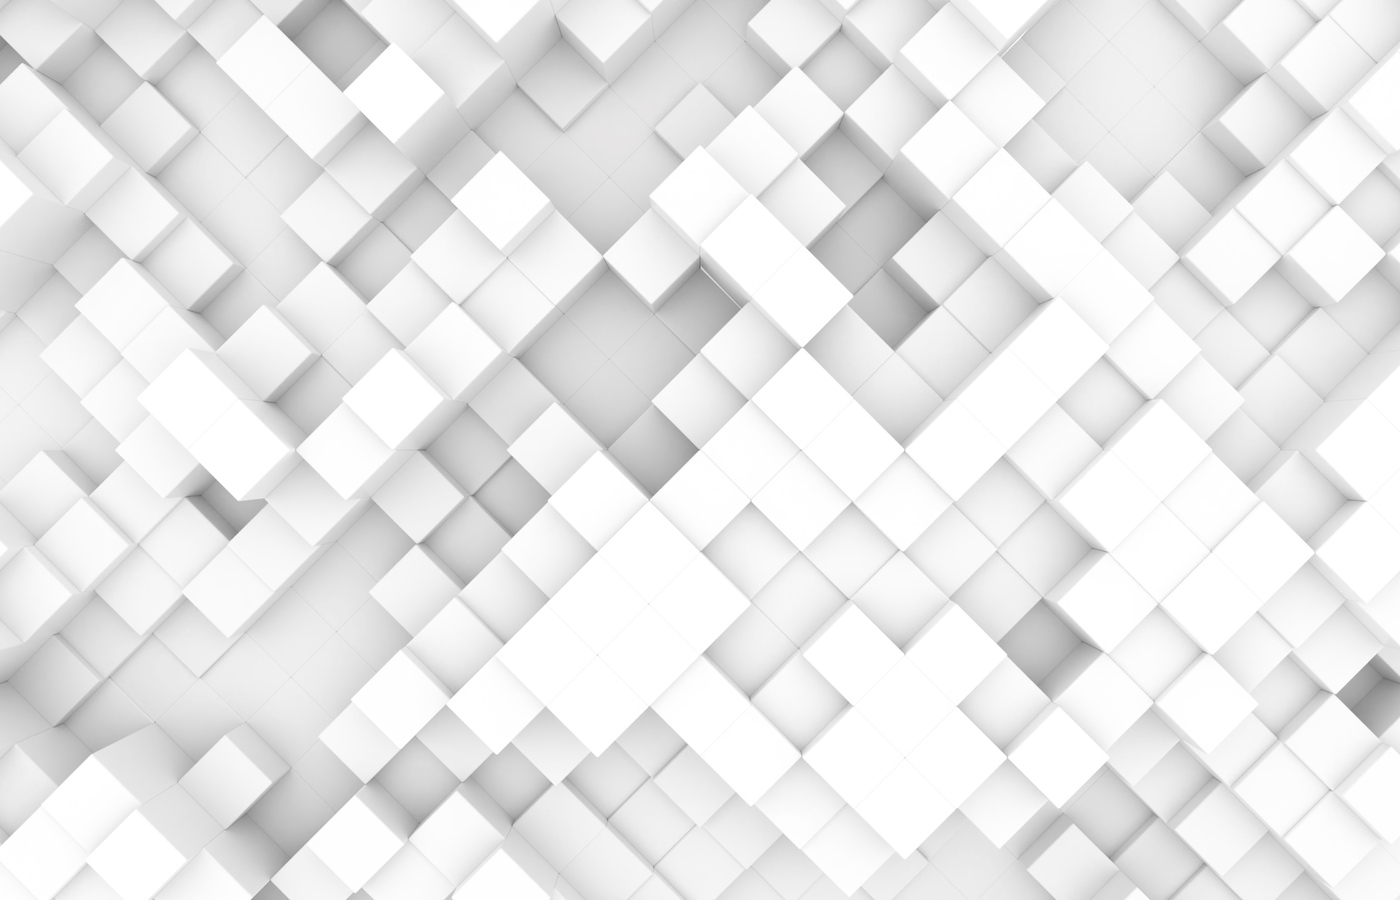 3d-cube-grids-stack-light-background-qg.jpg